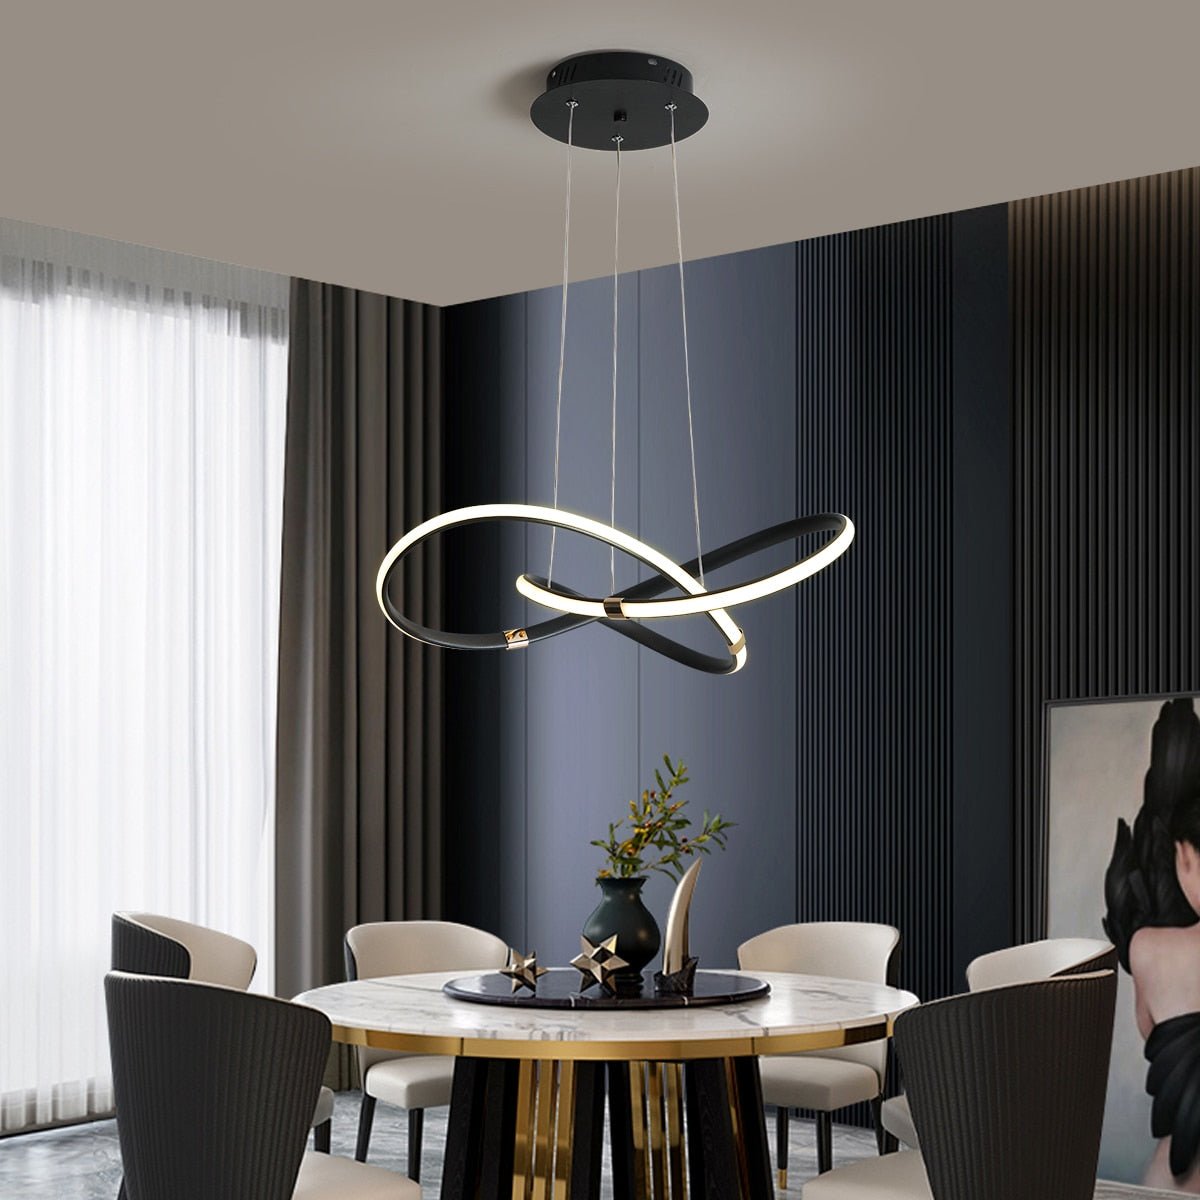 Dia LED Kitchen Table Lighting - Alexa Compatible - FuturKitchen